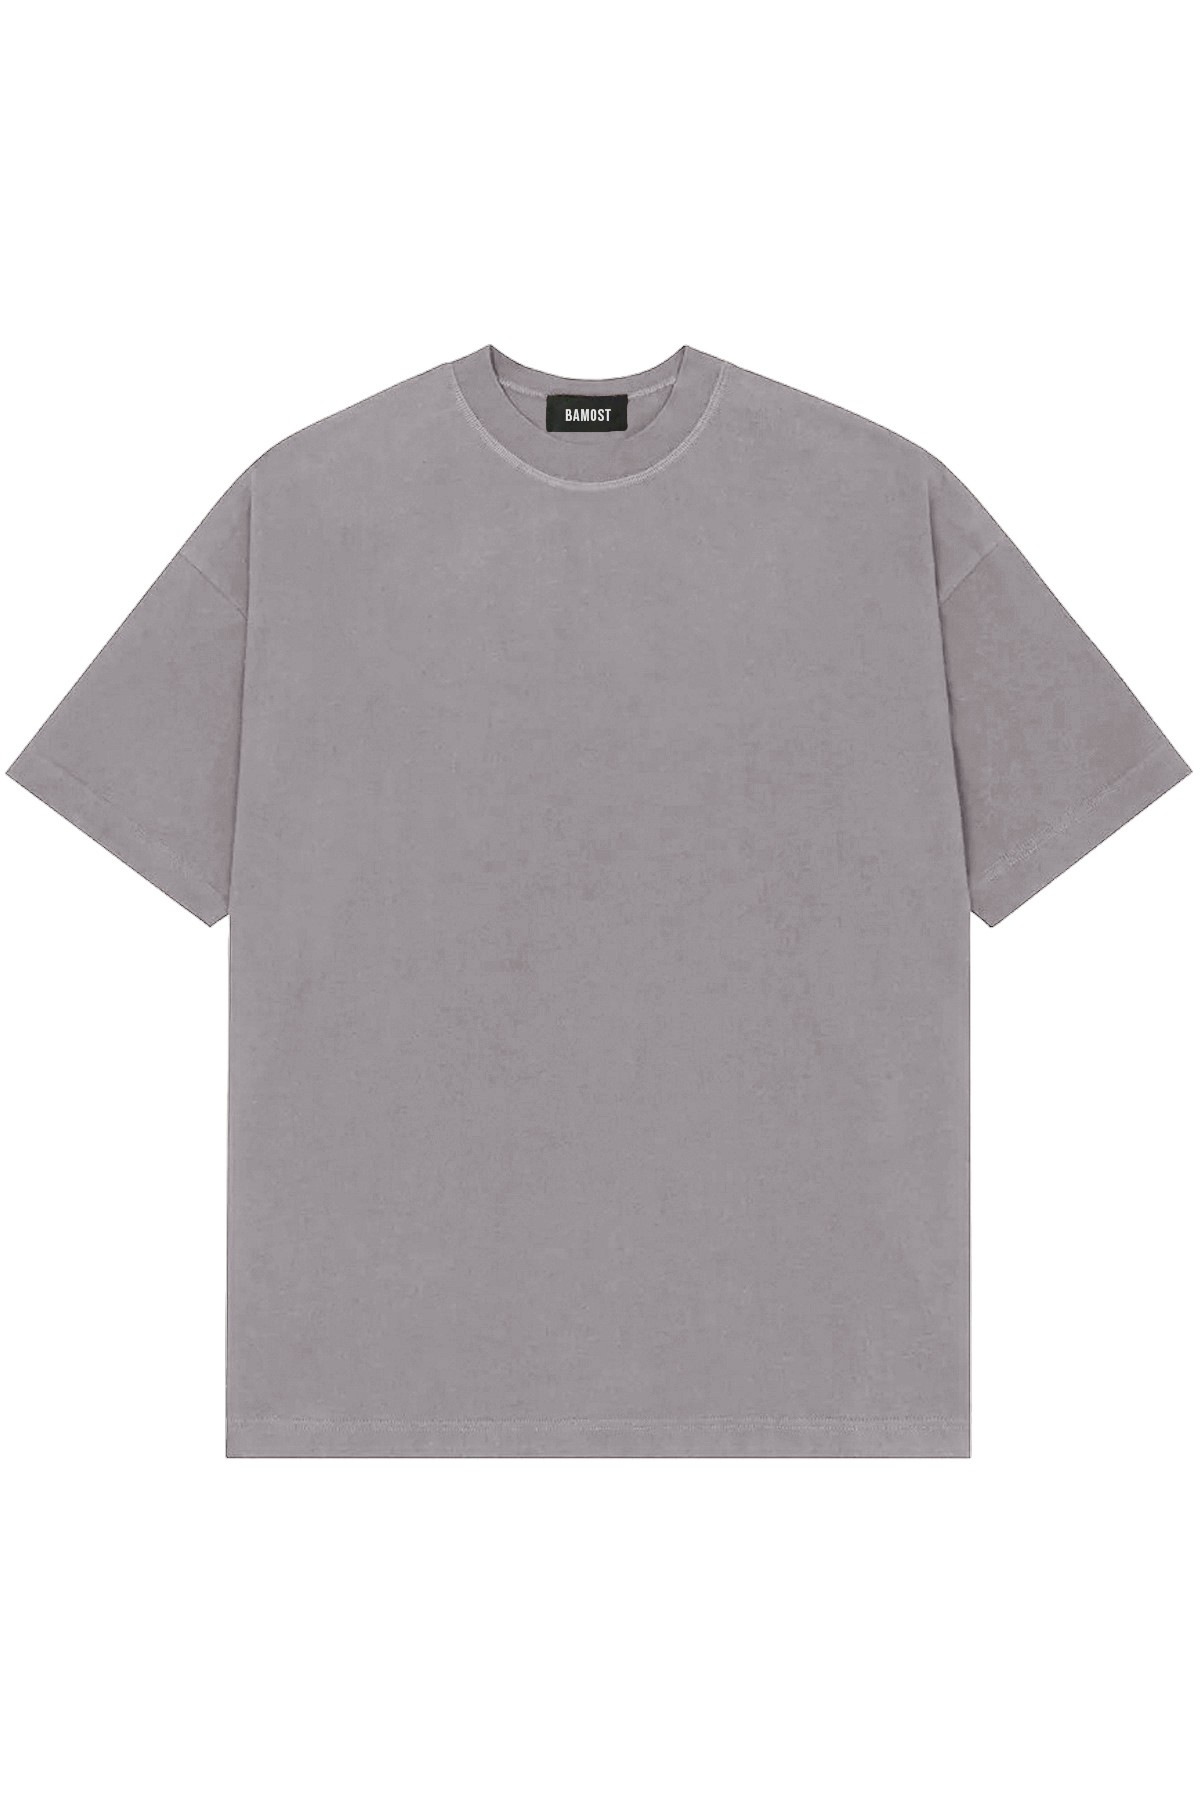 Boris - Comfort Basic T-Shirt - GRİ